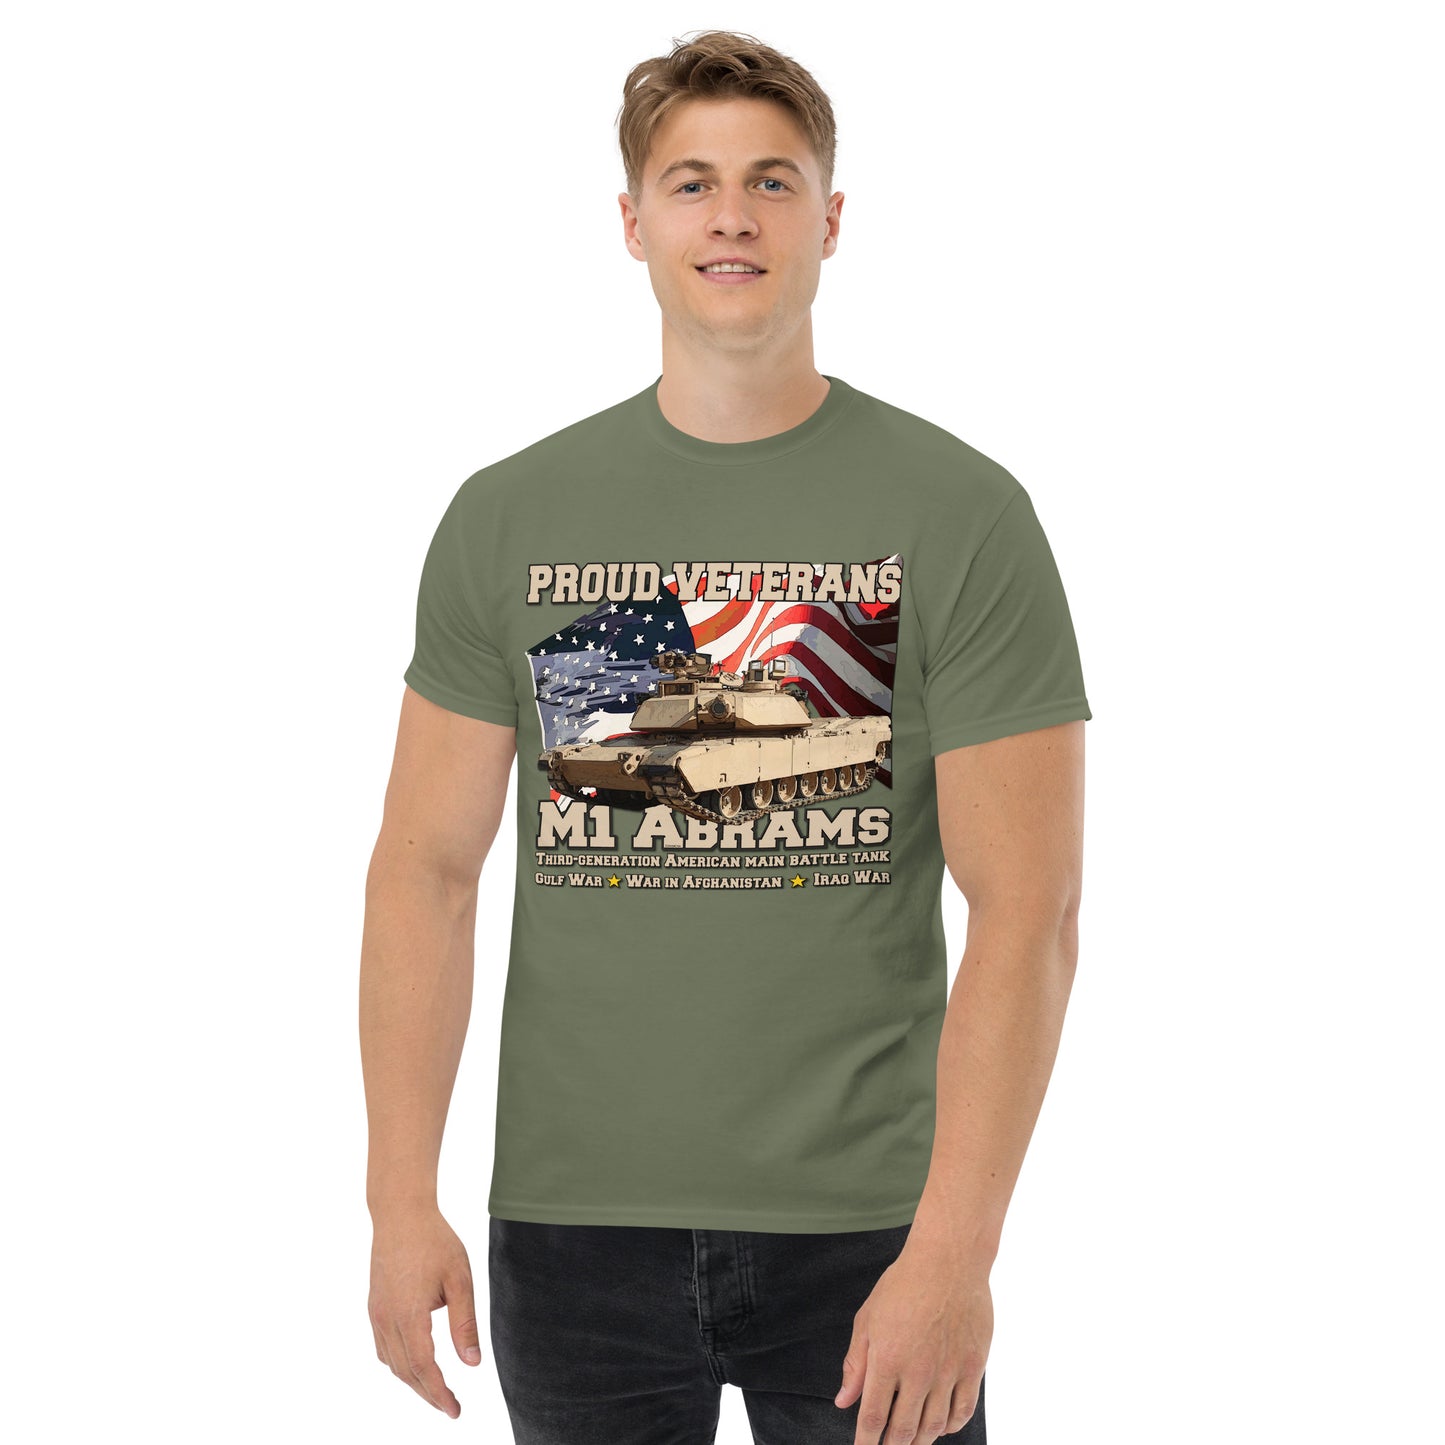 M1 Abrams Tank Proud Veterans t-shirt